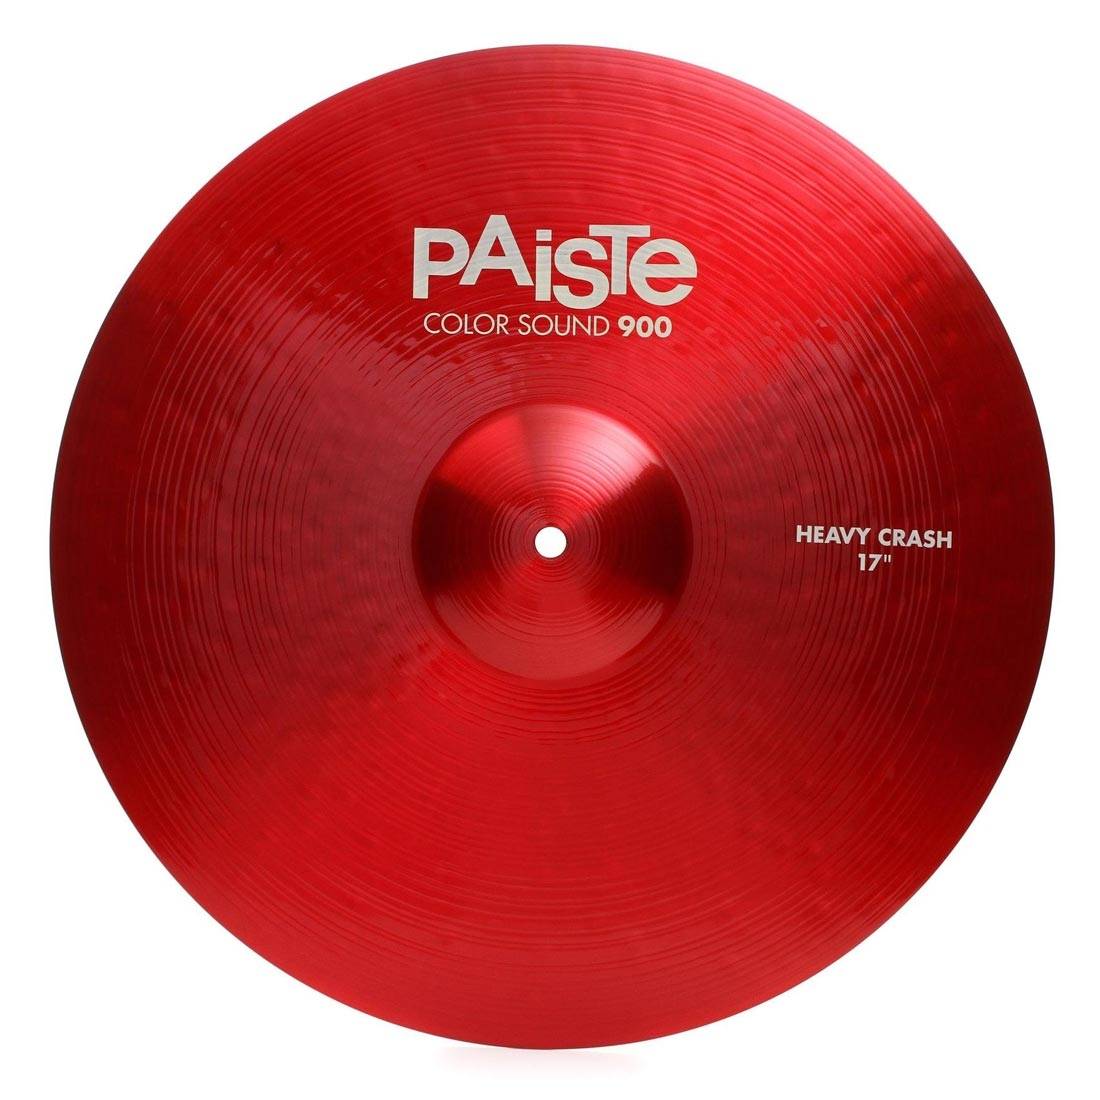 PAISTE 900 Color Sound 17'' Red Heavy Crash